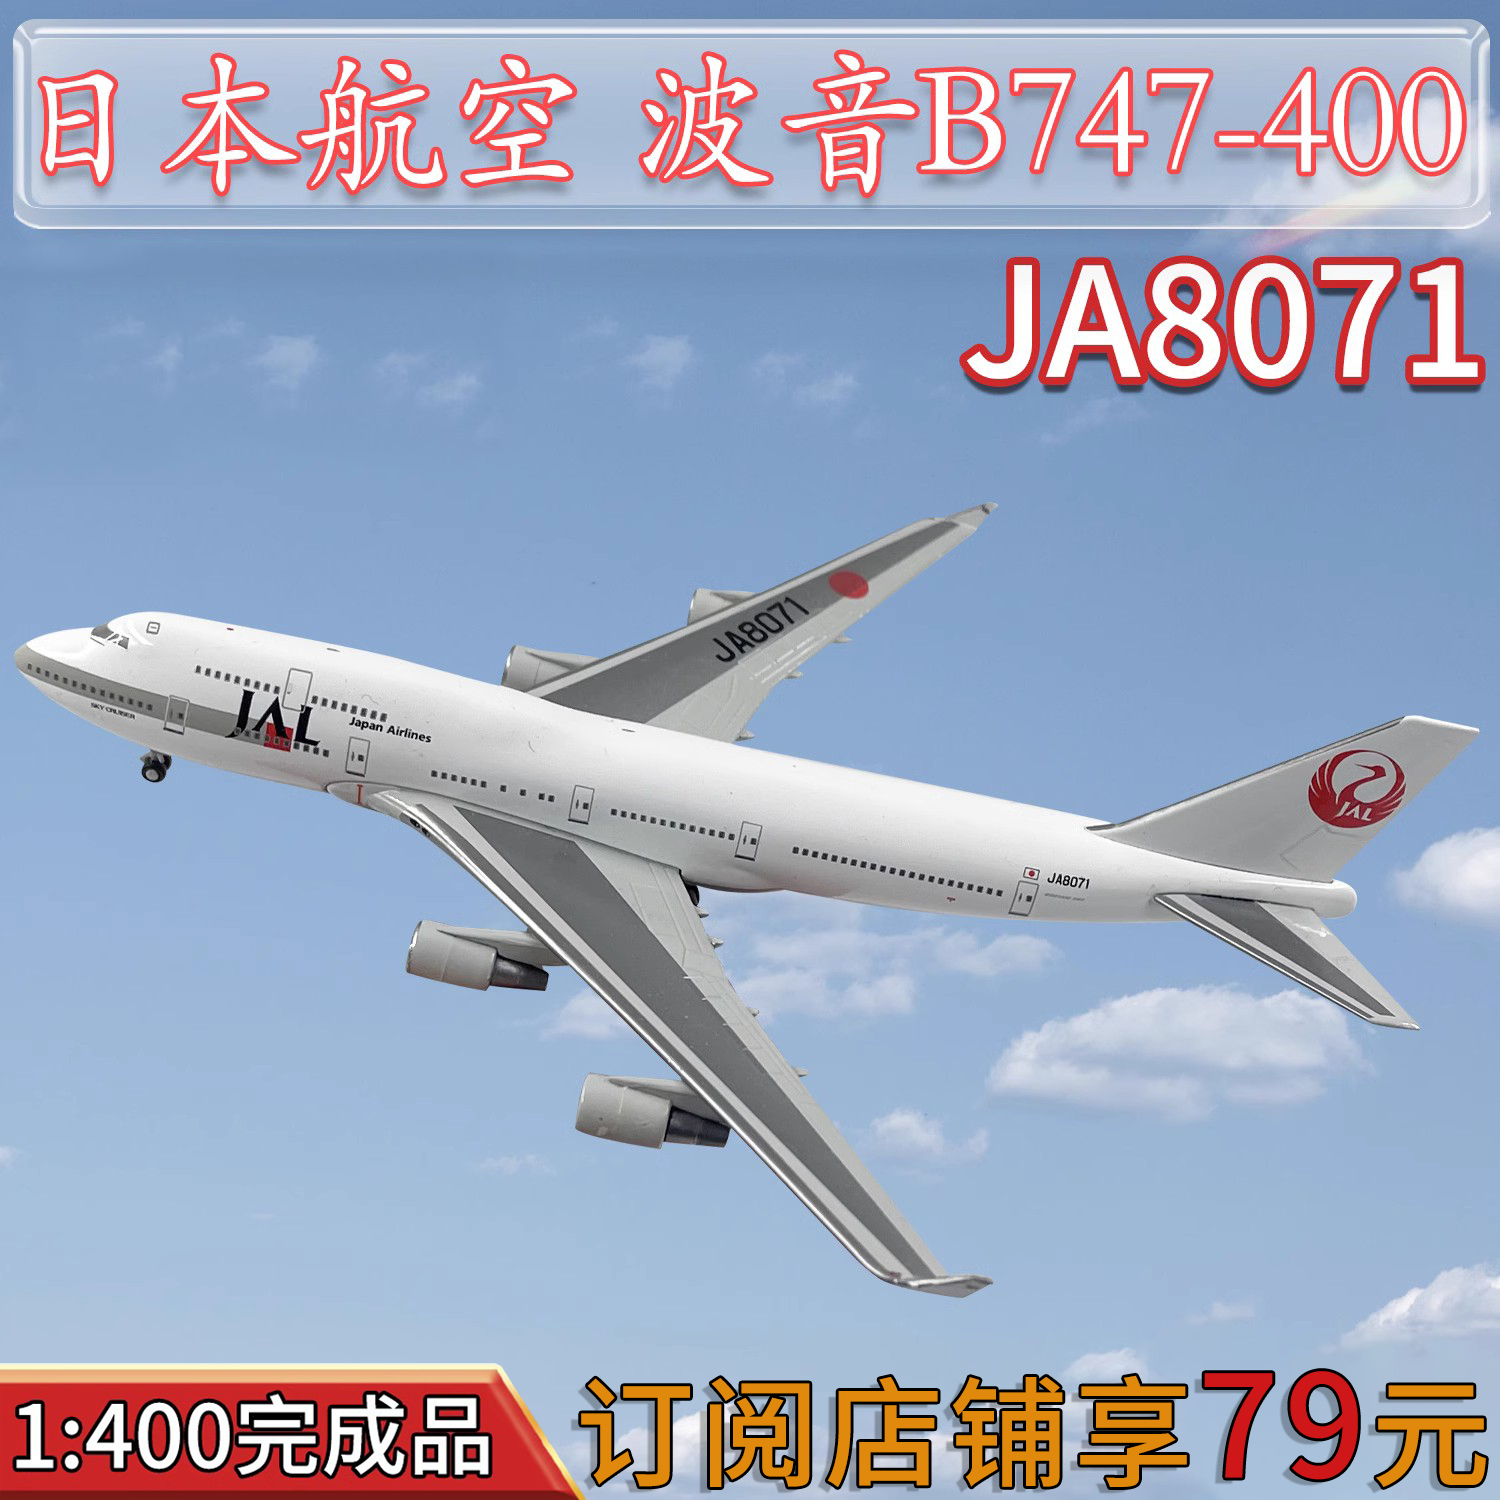 1:400 JAL日本航空波音B747-400客机JA8085飞机模型合金仿真摆件-Taobao